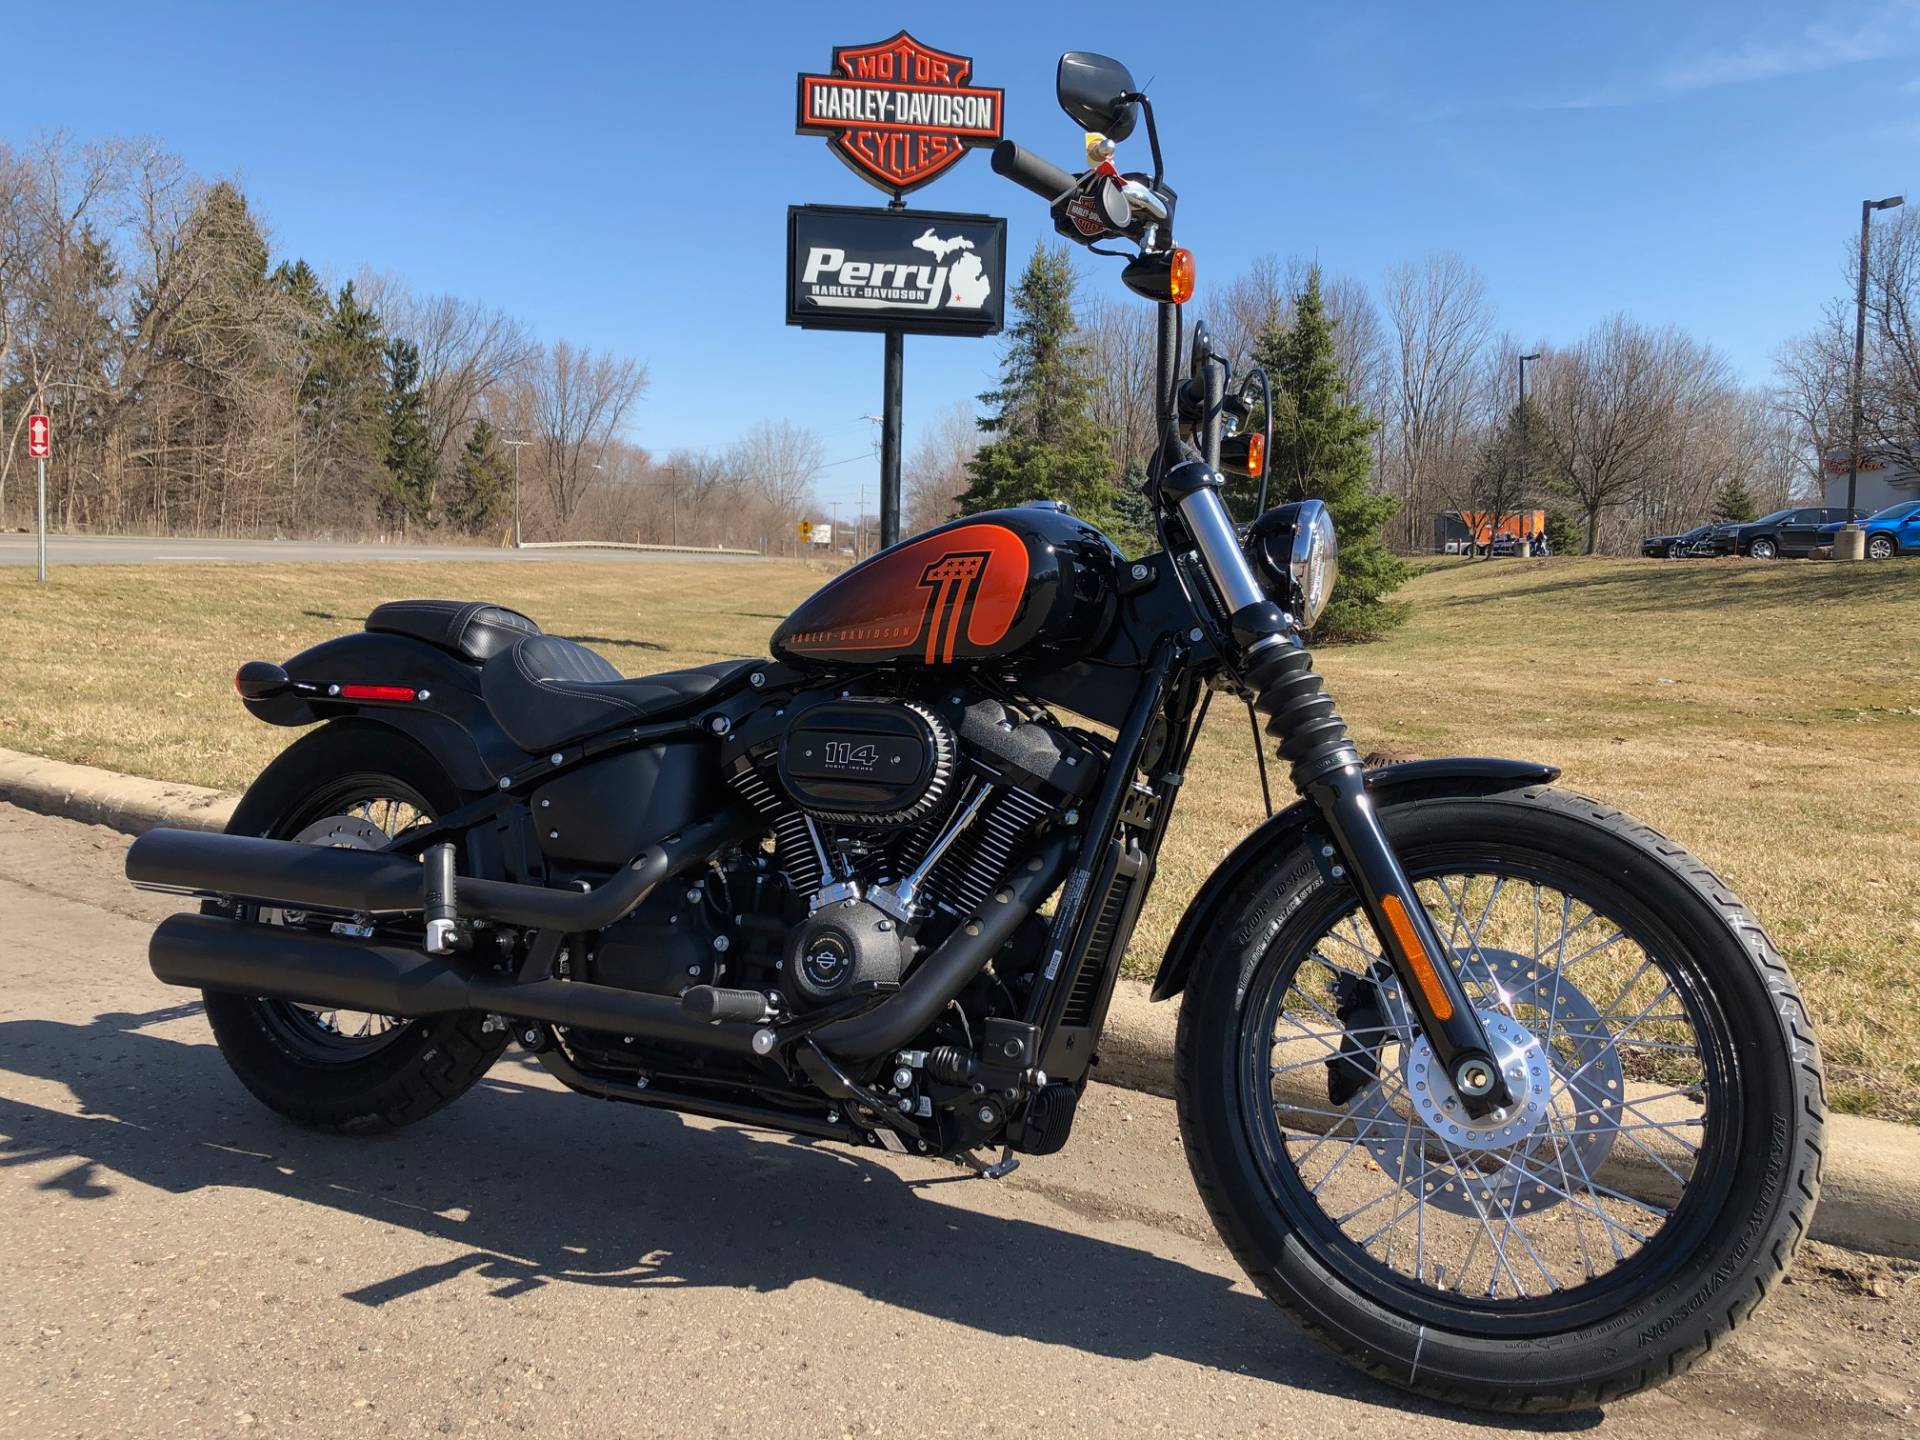 New 2021 Harley Davidson Street Bob 114 Motorcycles In Portage Mi 027416 Vivid Black